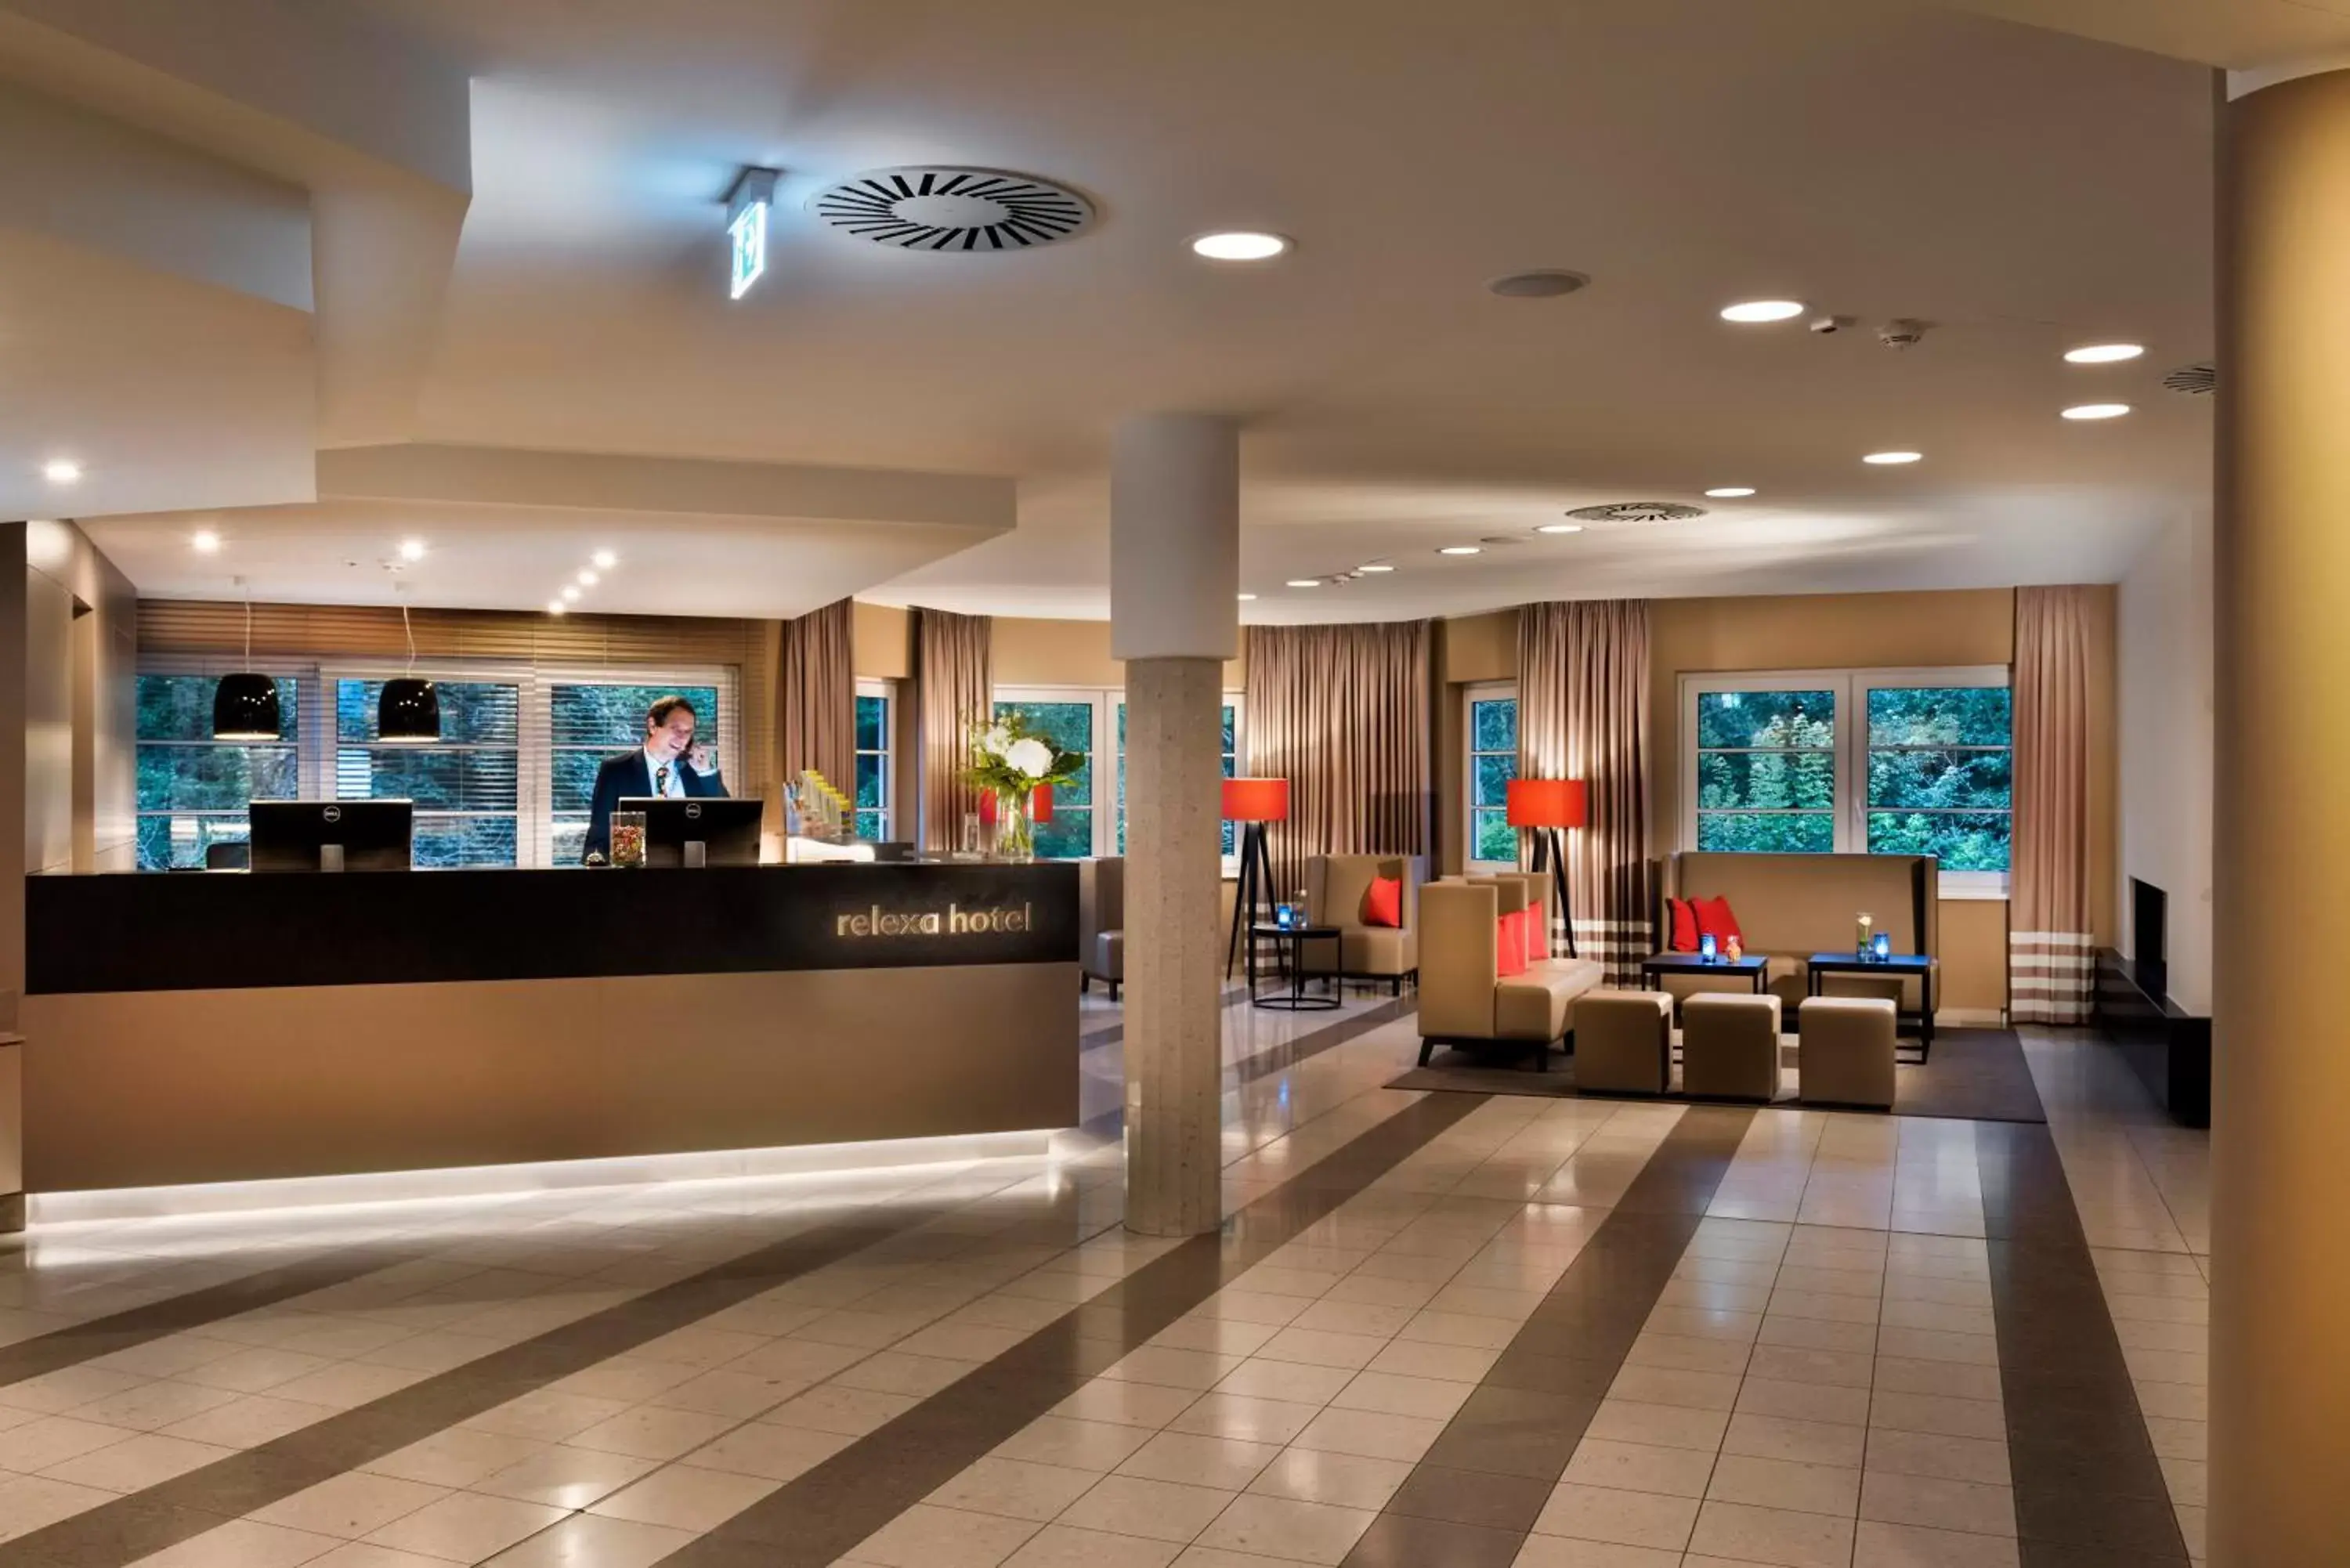 Lobby or reception in relexa hotel Harz-Wald Braunlage GmbH